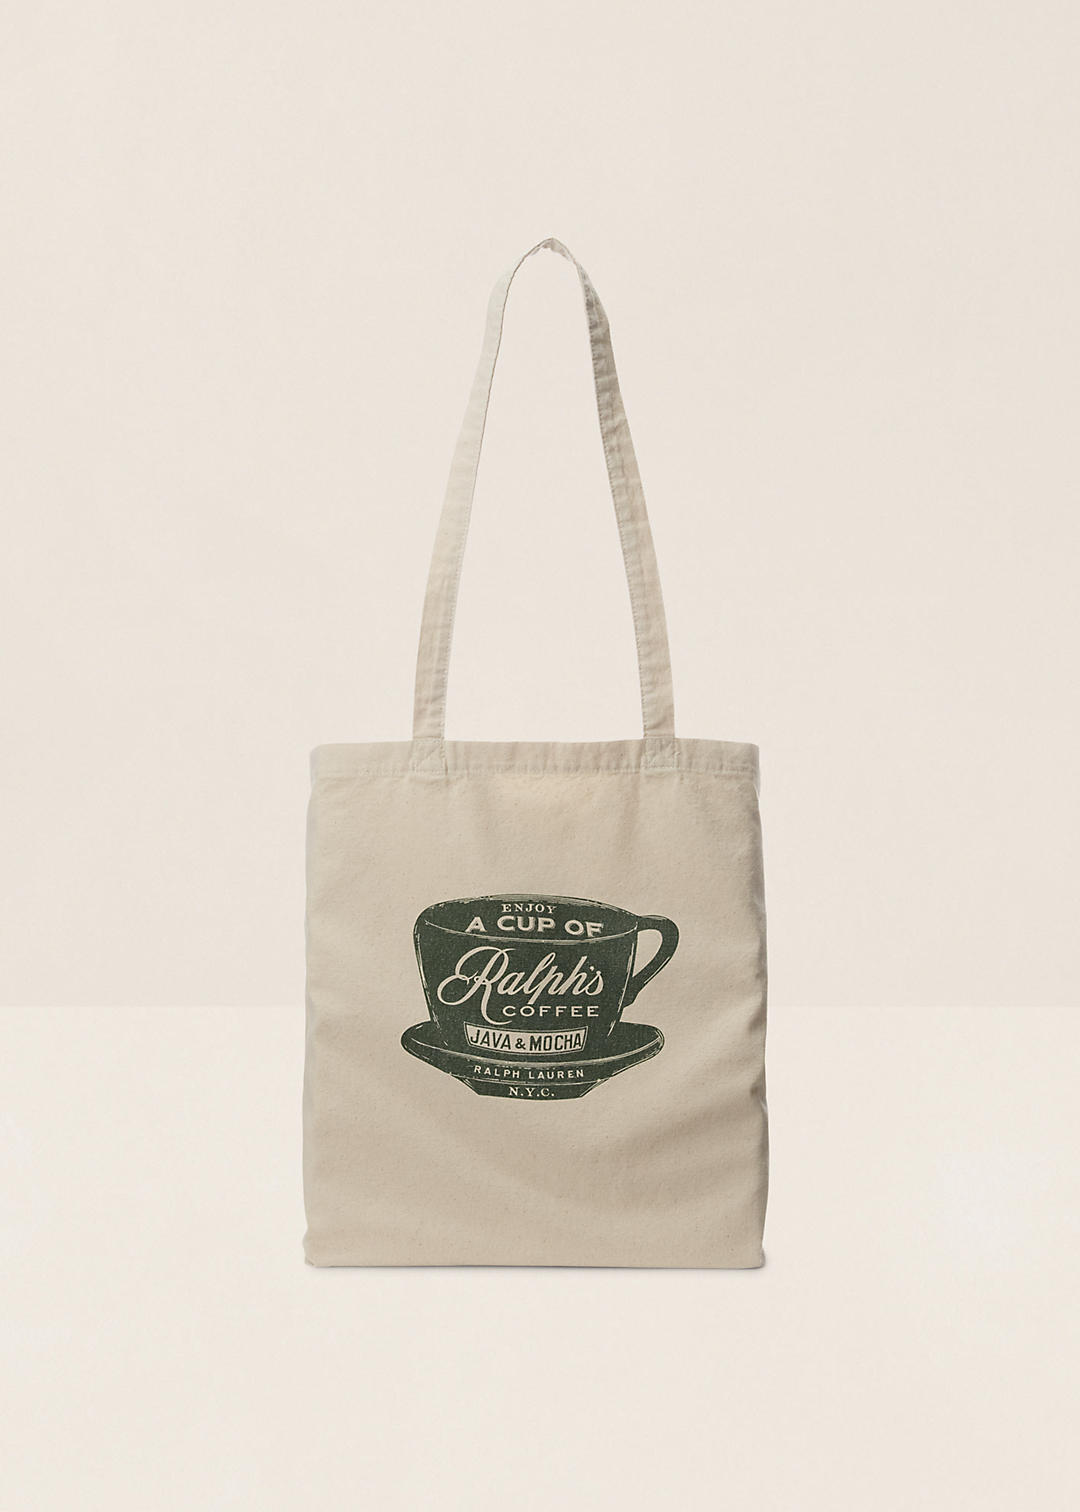 Ralph s Coffee Tote Bag